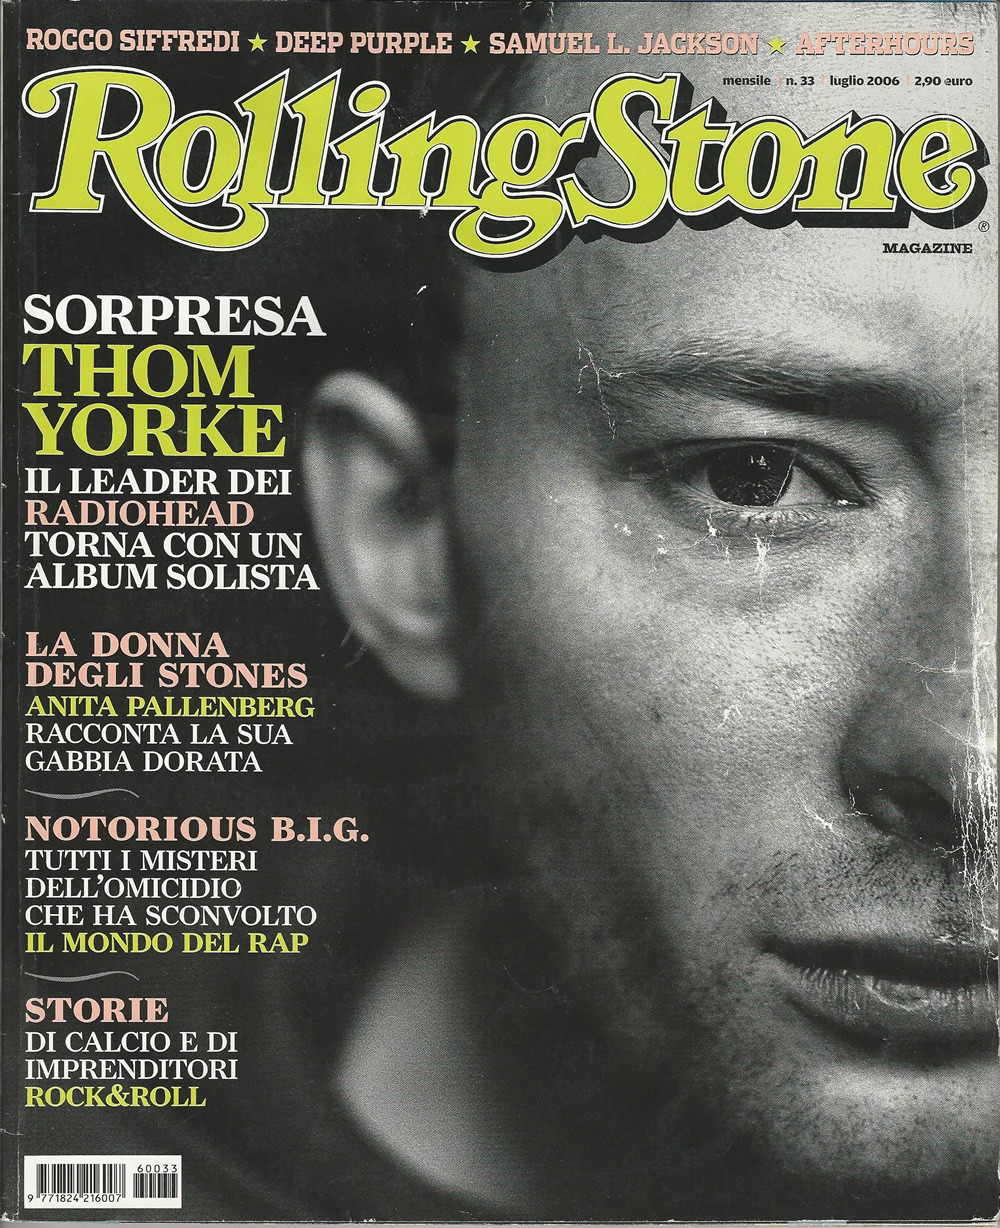 2006 (N33) * Magazine Cover Rolling Stone Original 